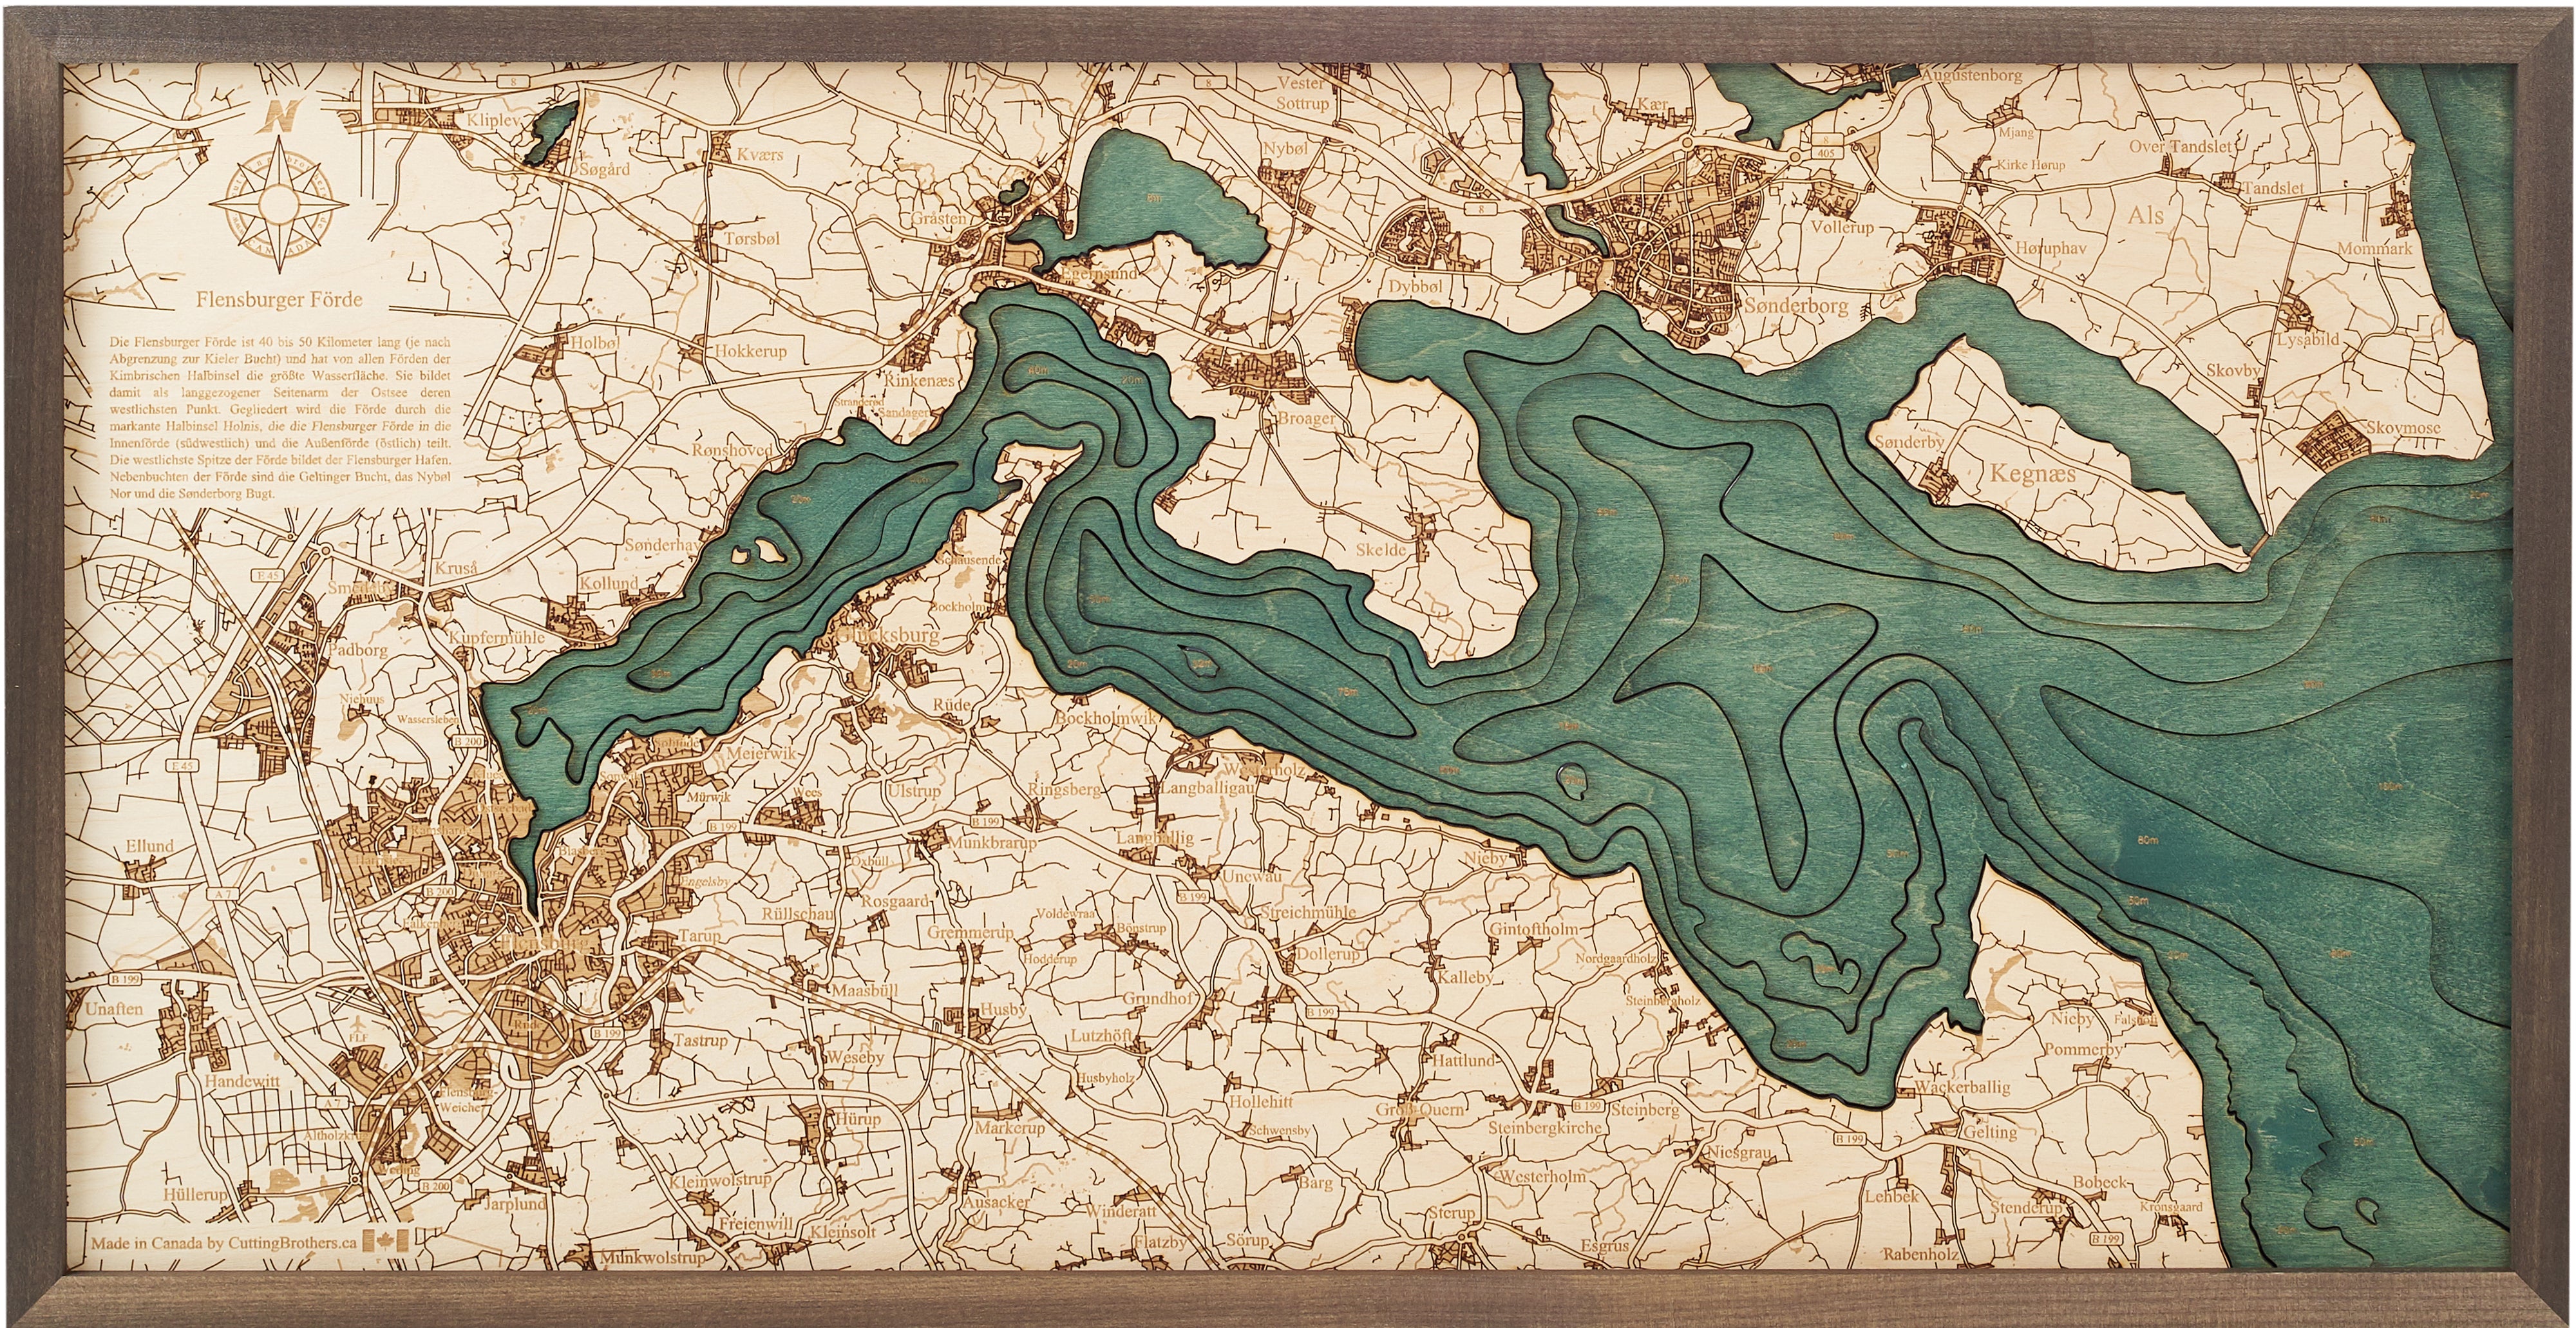 FLENSBURG FJORD 3D wooden wall map - version M 